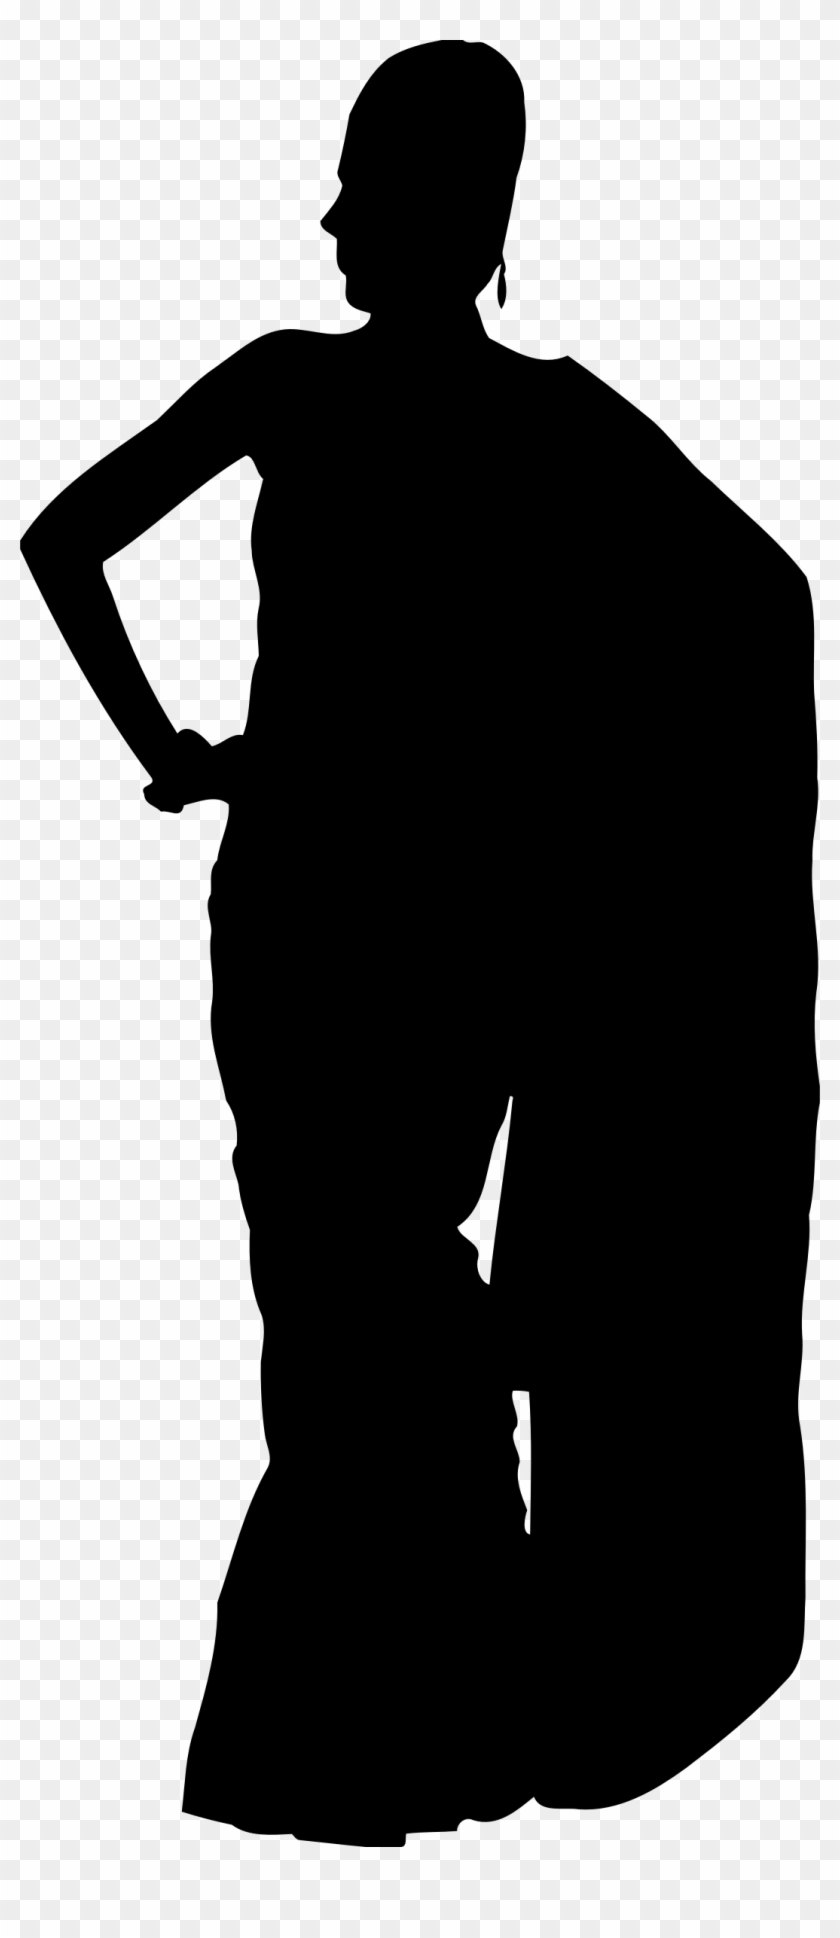 Woman In Saree Silhouette 2 - Saree Icon #799414